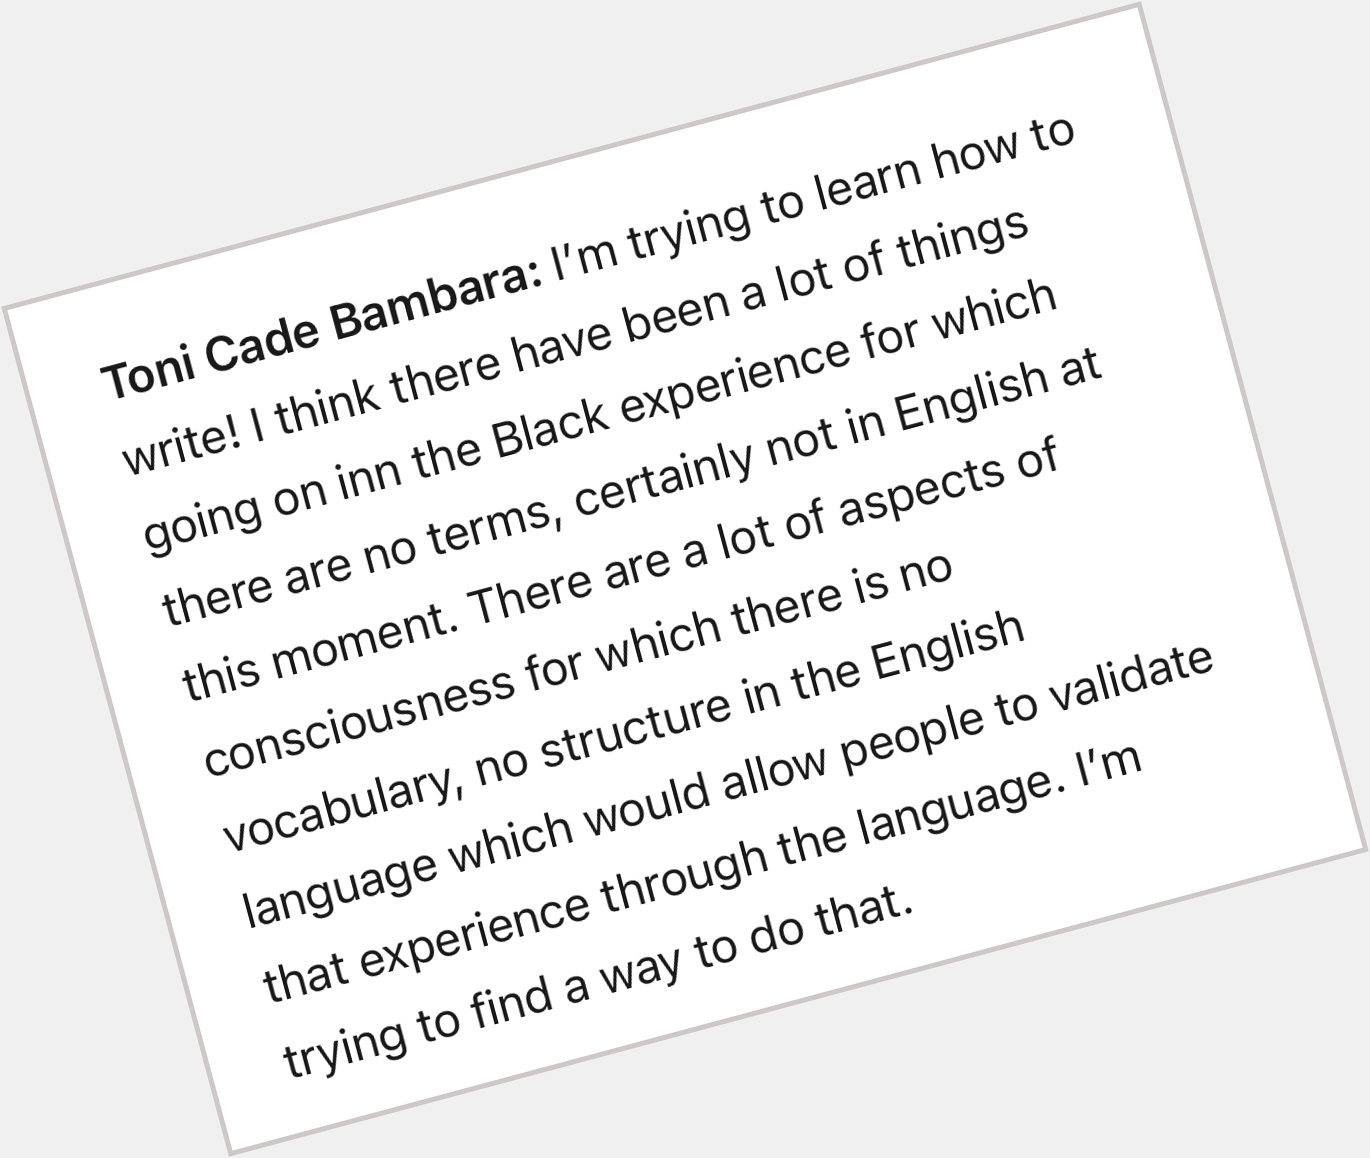 Kalamu Ya Salaam in conversation with Toni Cade Bambara on the limits of English-

Sourced:  